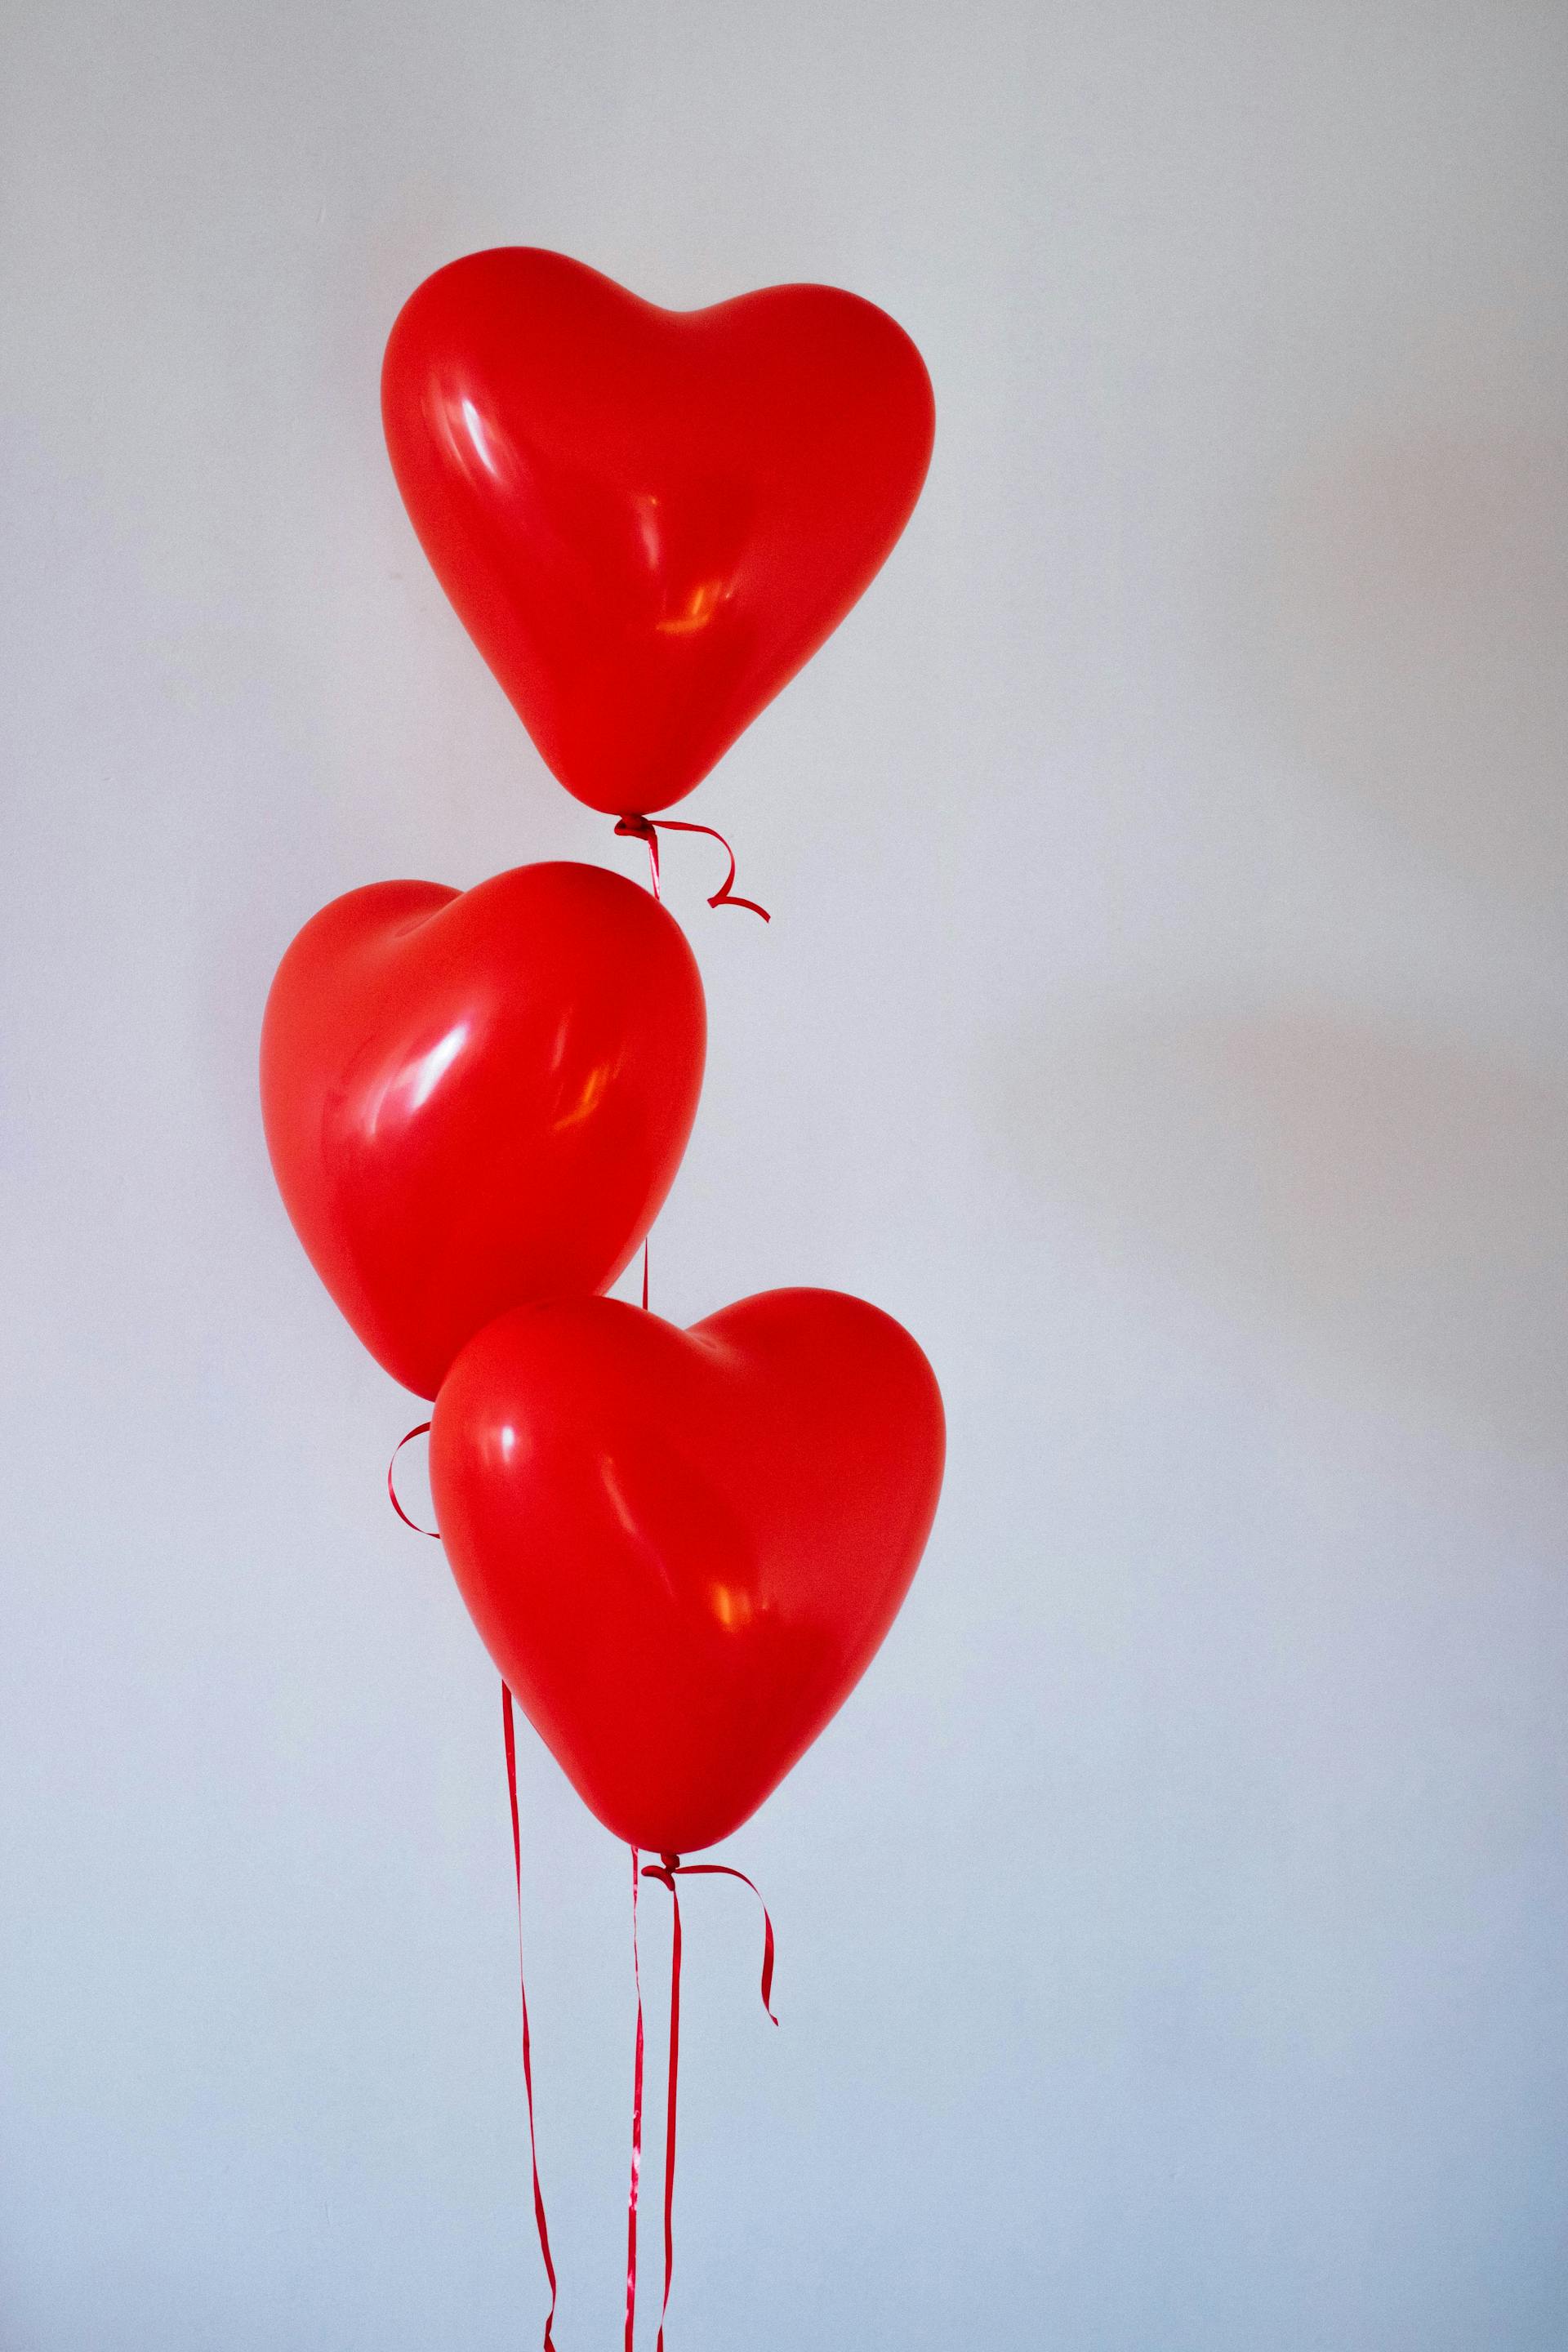 Three heart-shaped balloons | Source: Pexels